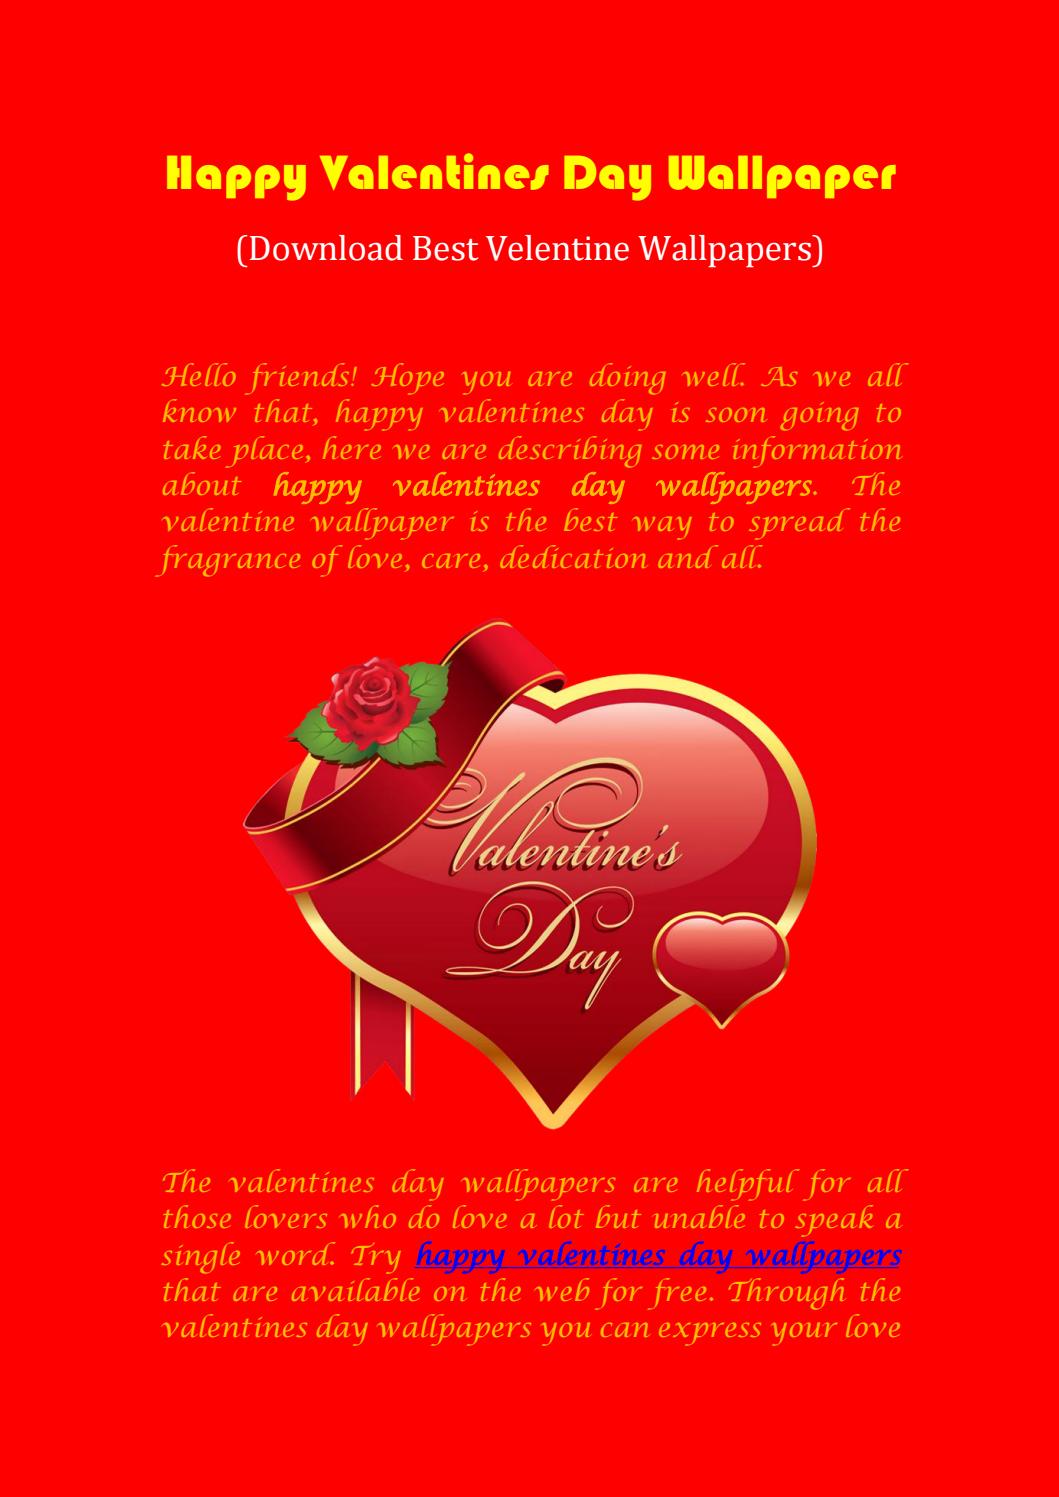 valentine wallpaper,text,valentine's day,heart,illustration,poster